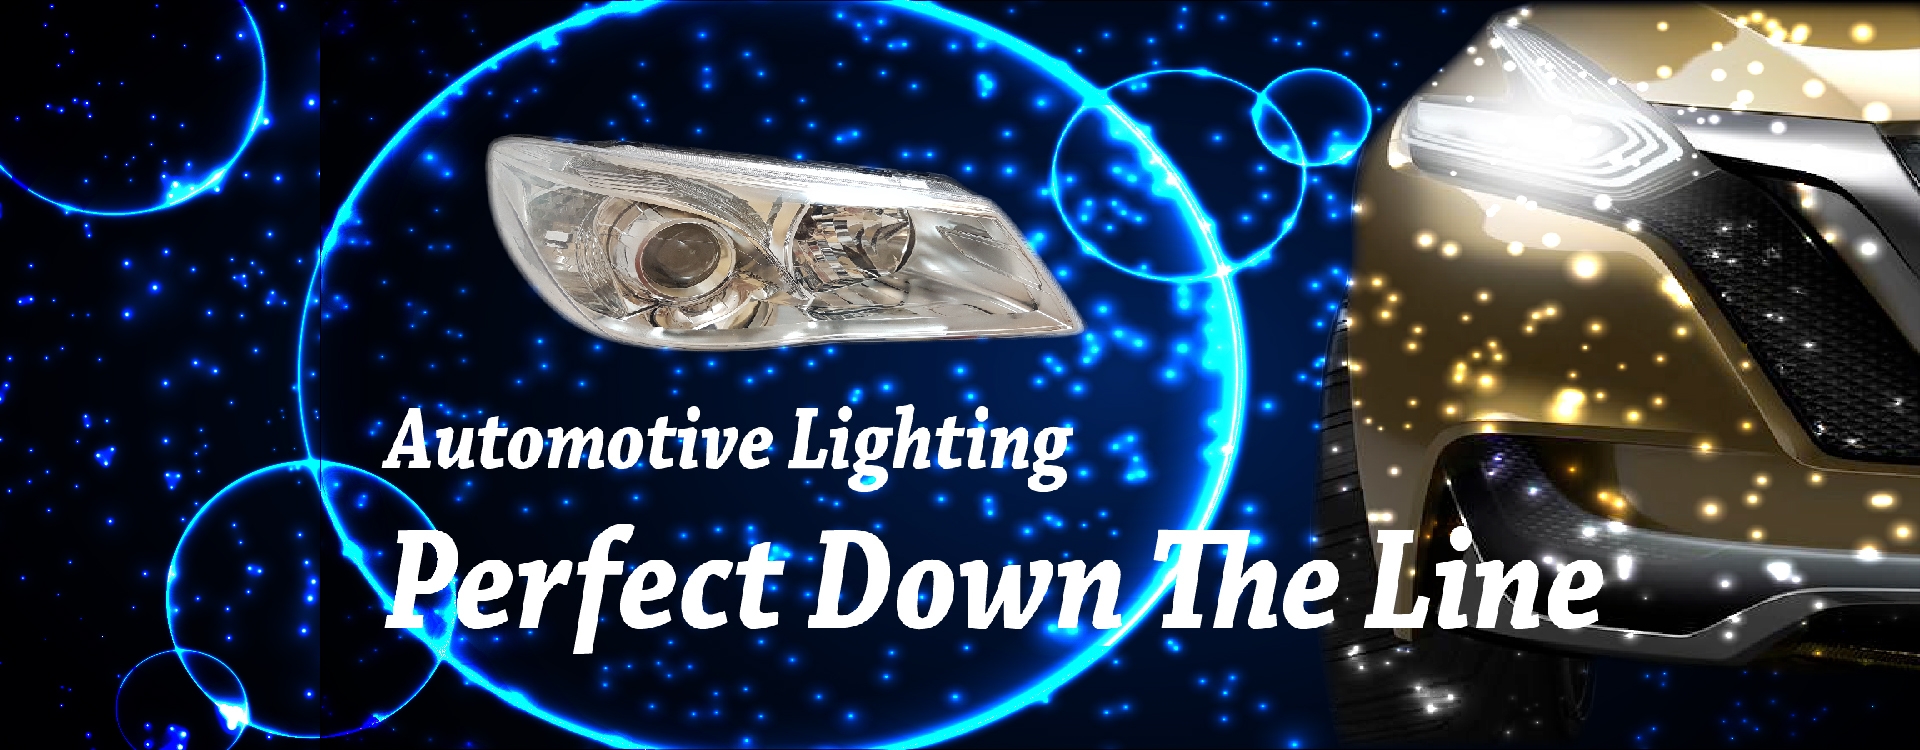  Automotive lighting